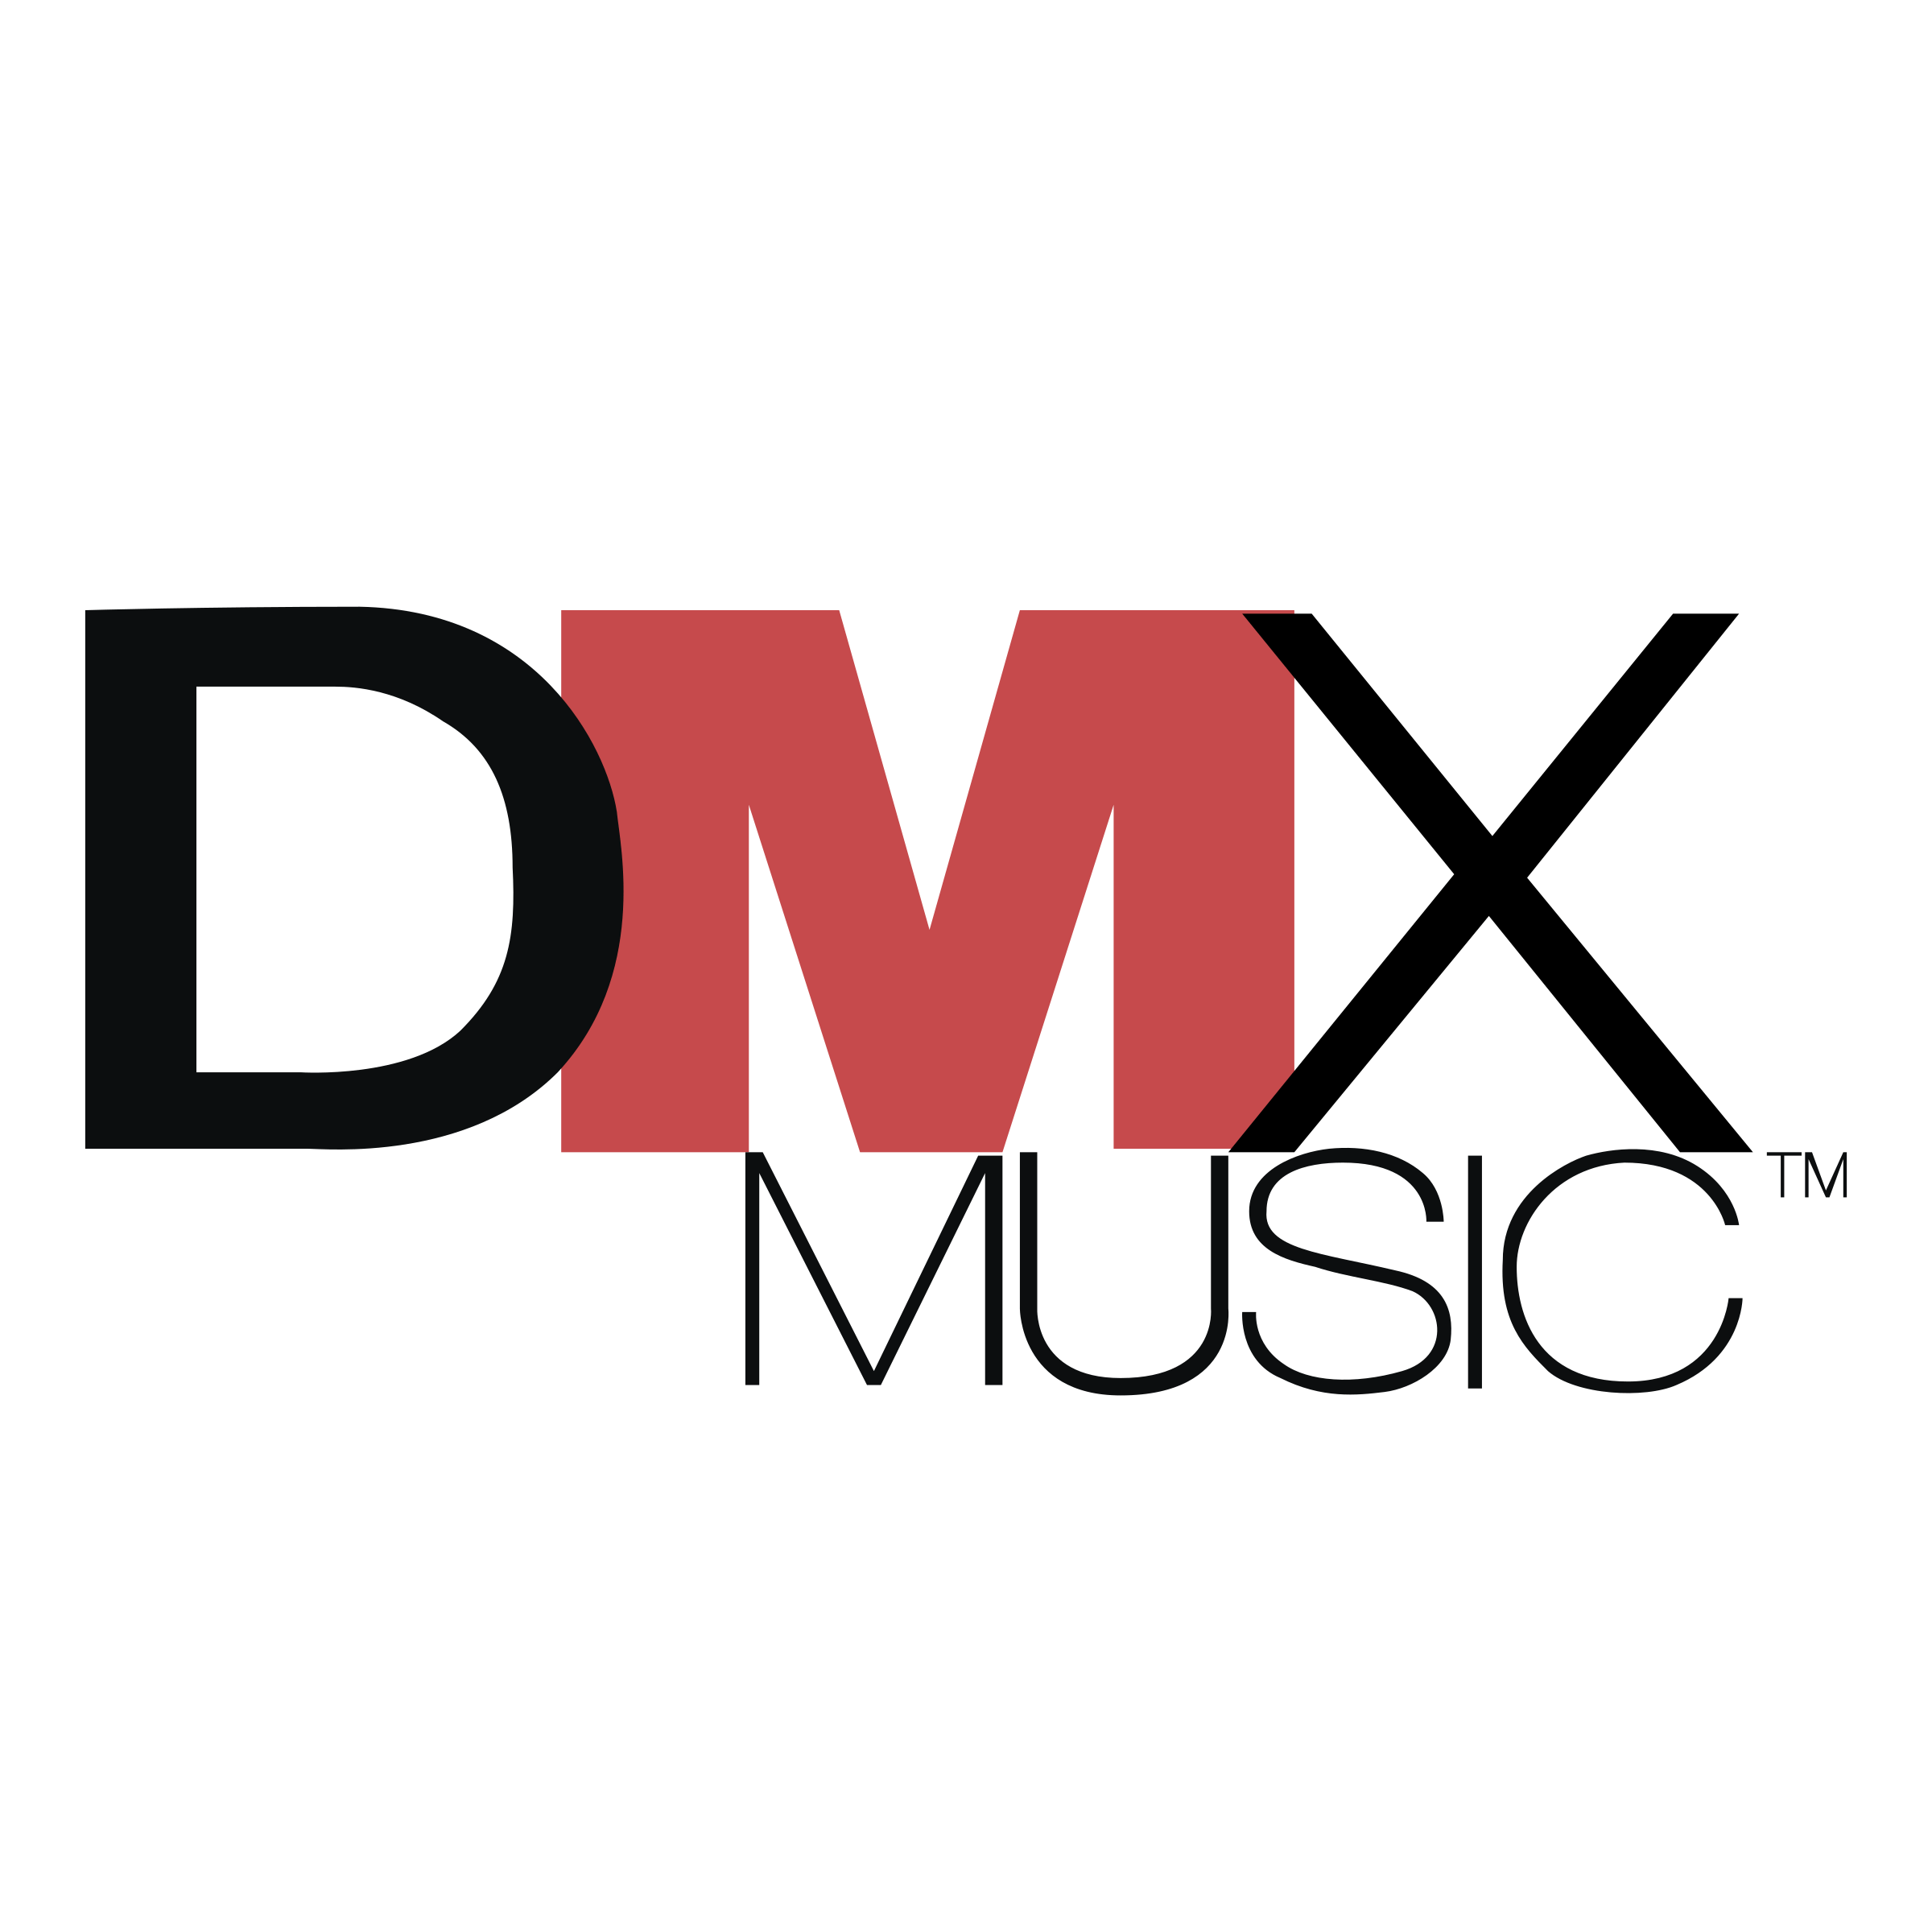 DMX Logo - DMX Music Logo PNG Transparent & SVG Vector - Freebie Supply